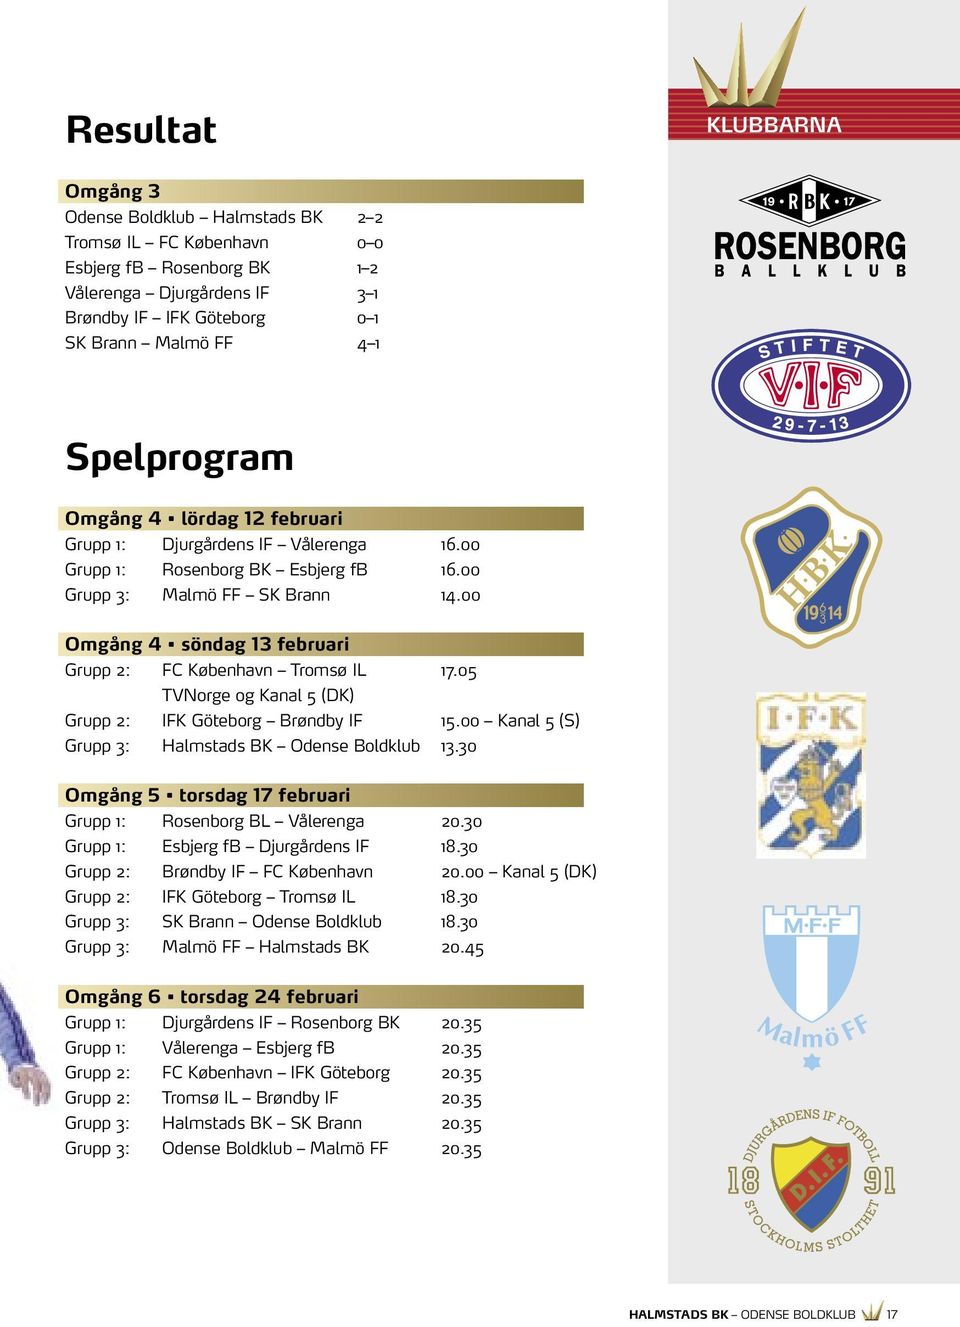 00 Omgång 4 söndag 13 februari Grupp 2: FC København Tromsø IL 17.05 TVNorge og Kanal 5 (DK) Grupp 2: IFK Göteborg Brøndby IF 15.00 Kanal 5 (S) Grupp 3: Halmstads BK Odense Boldklub 13.